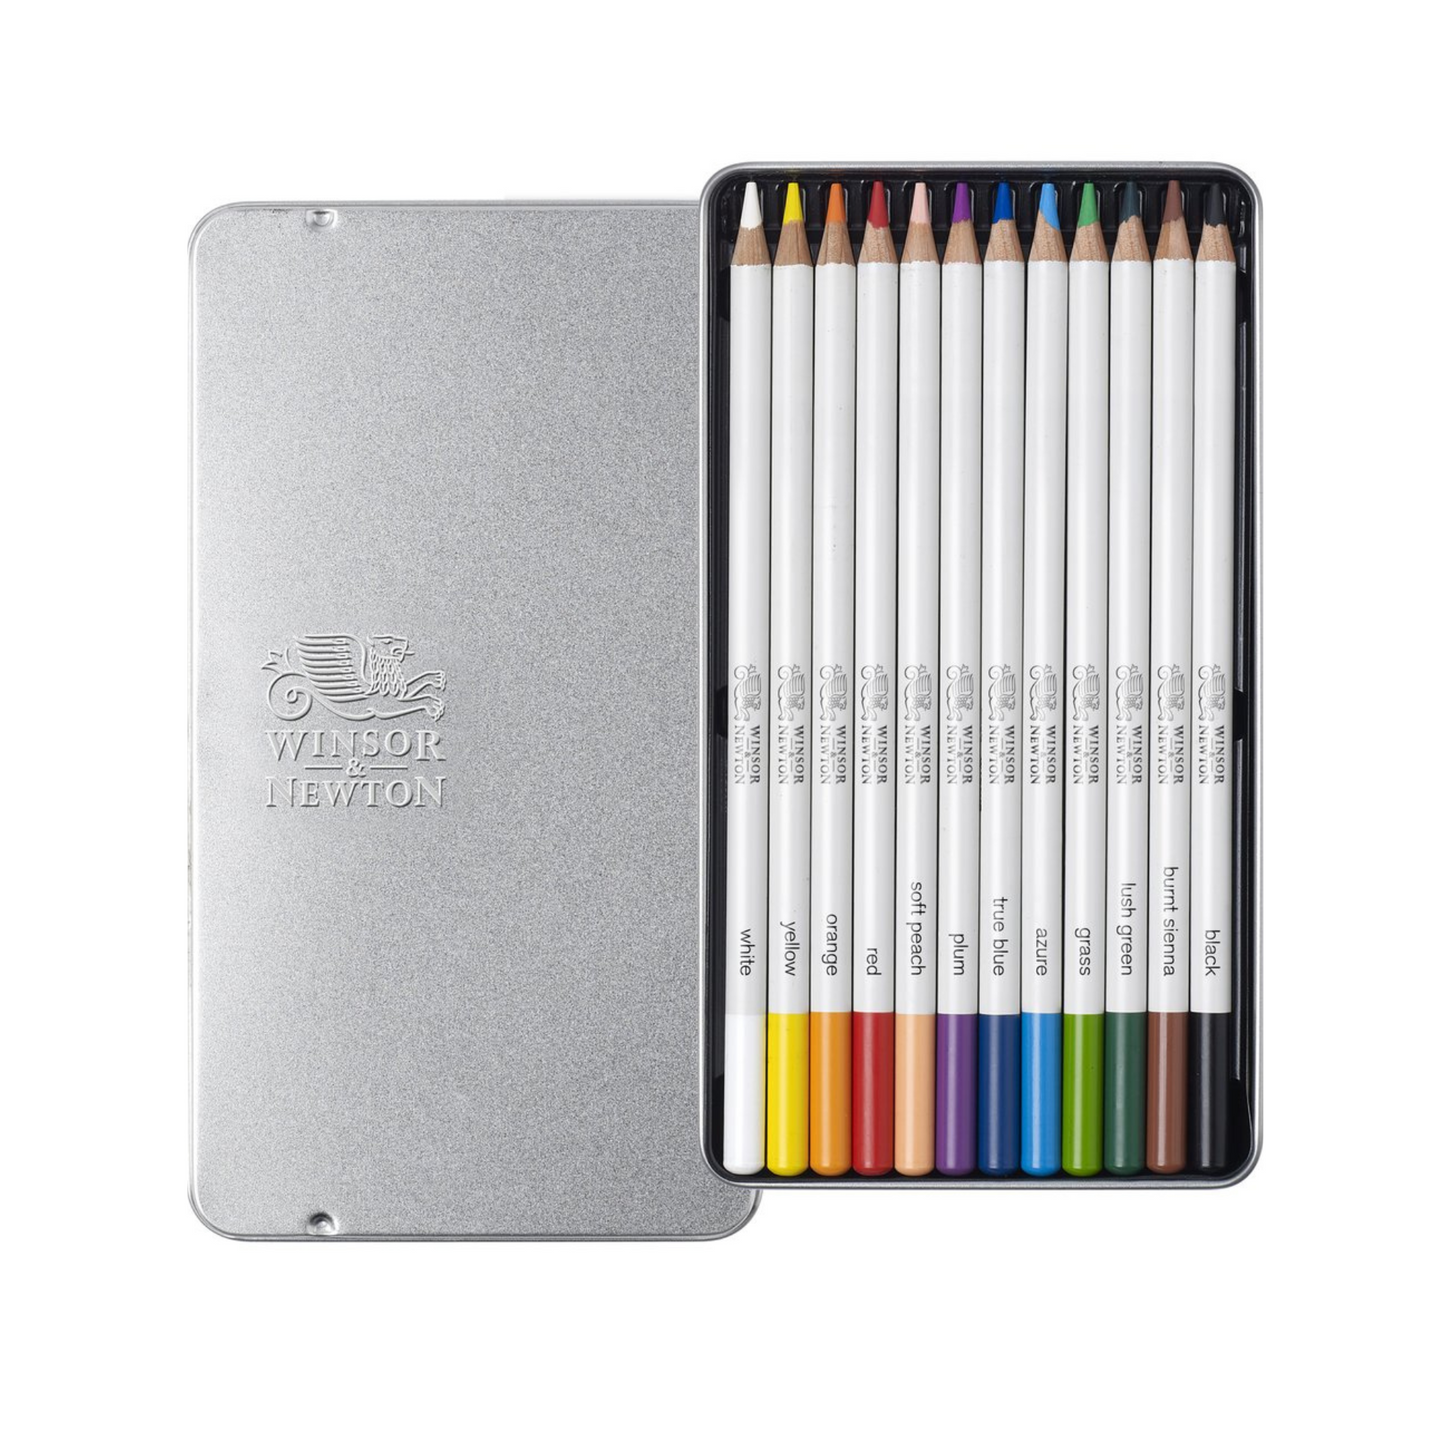 Winsor & Newton Studio Collection Watercolour Pencils (set of 12 in metal tin)